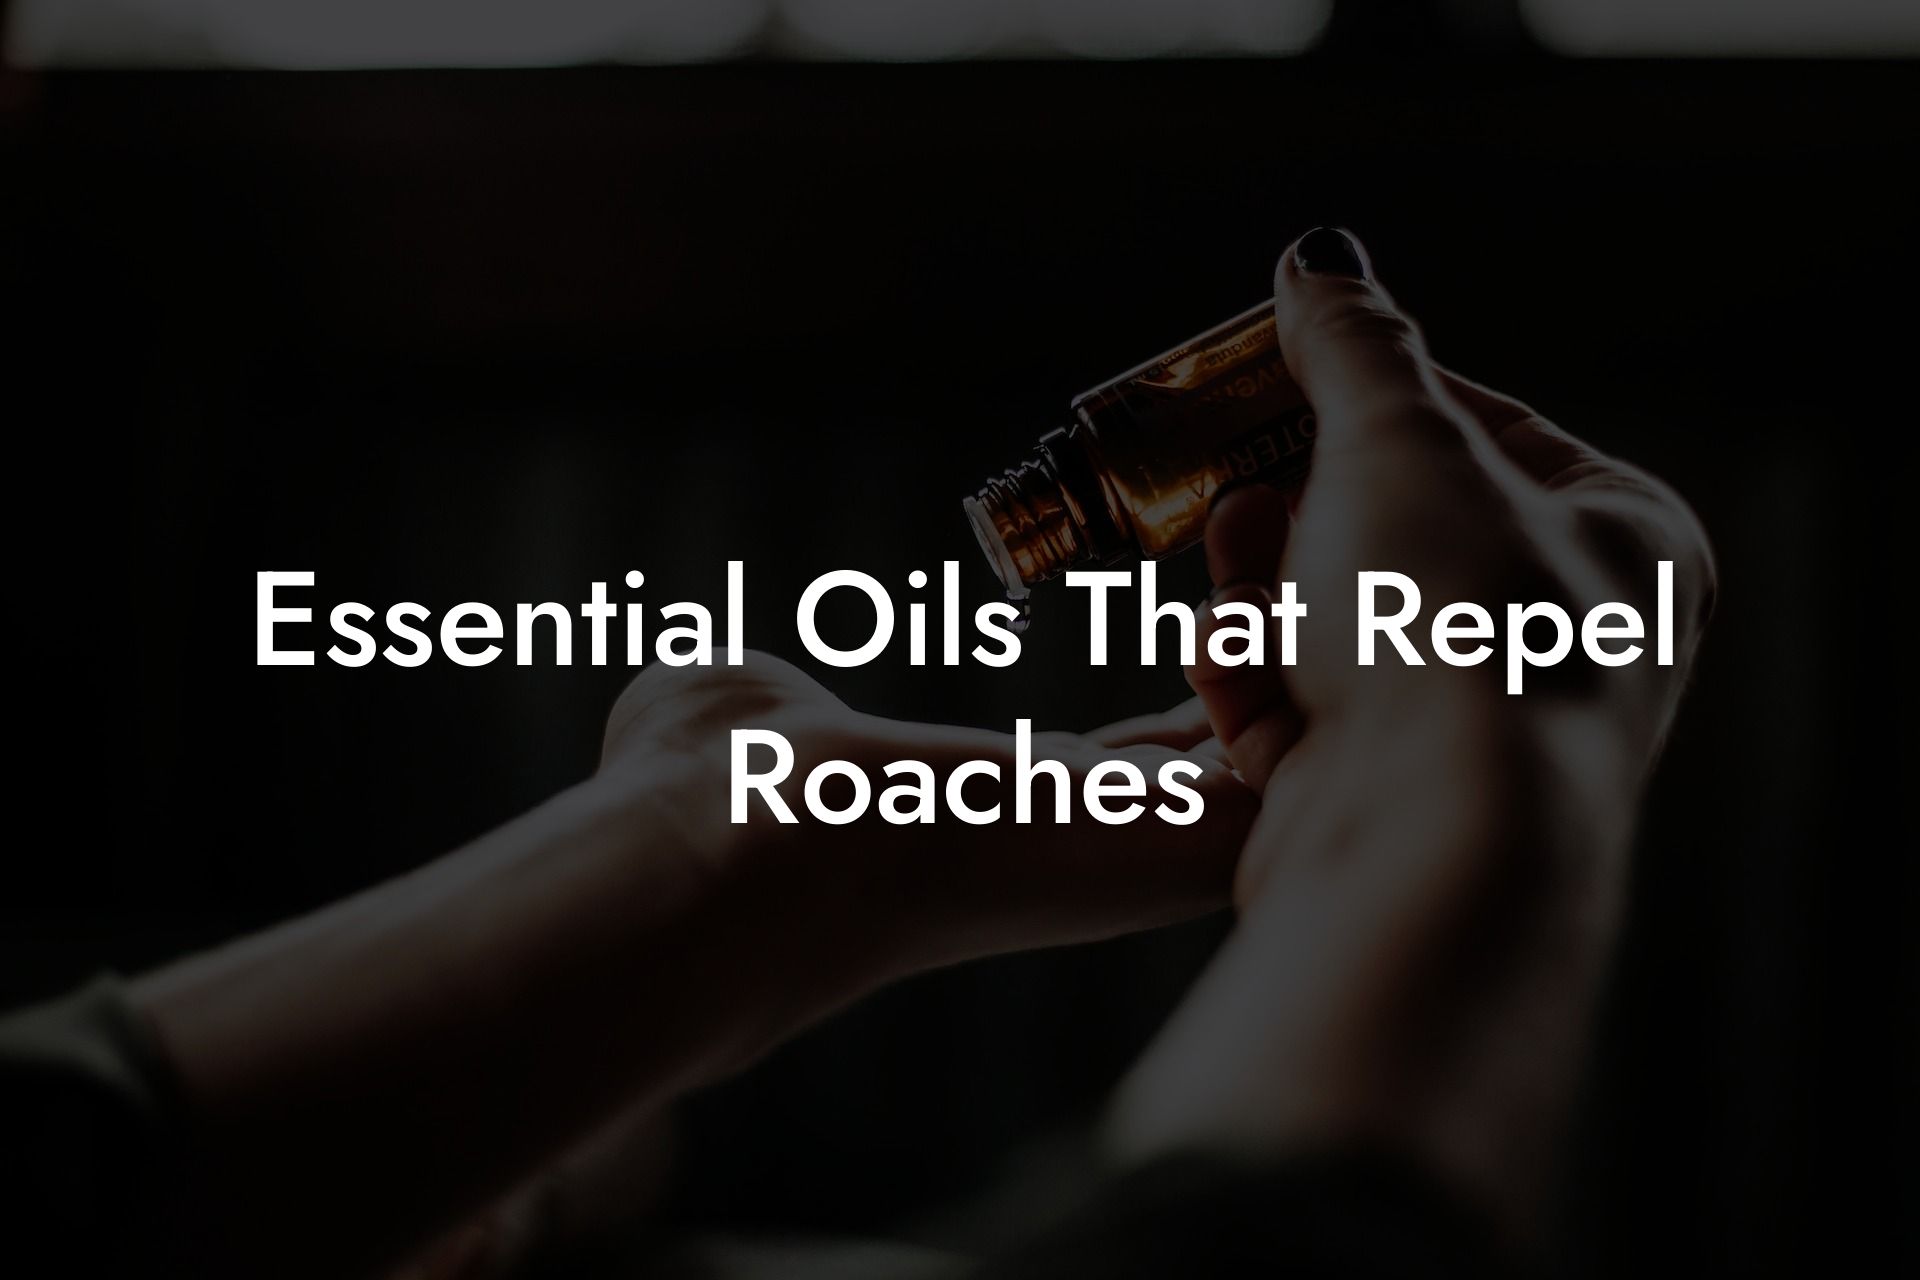 Essential Oils That Repel Roaches